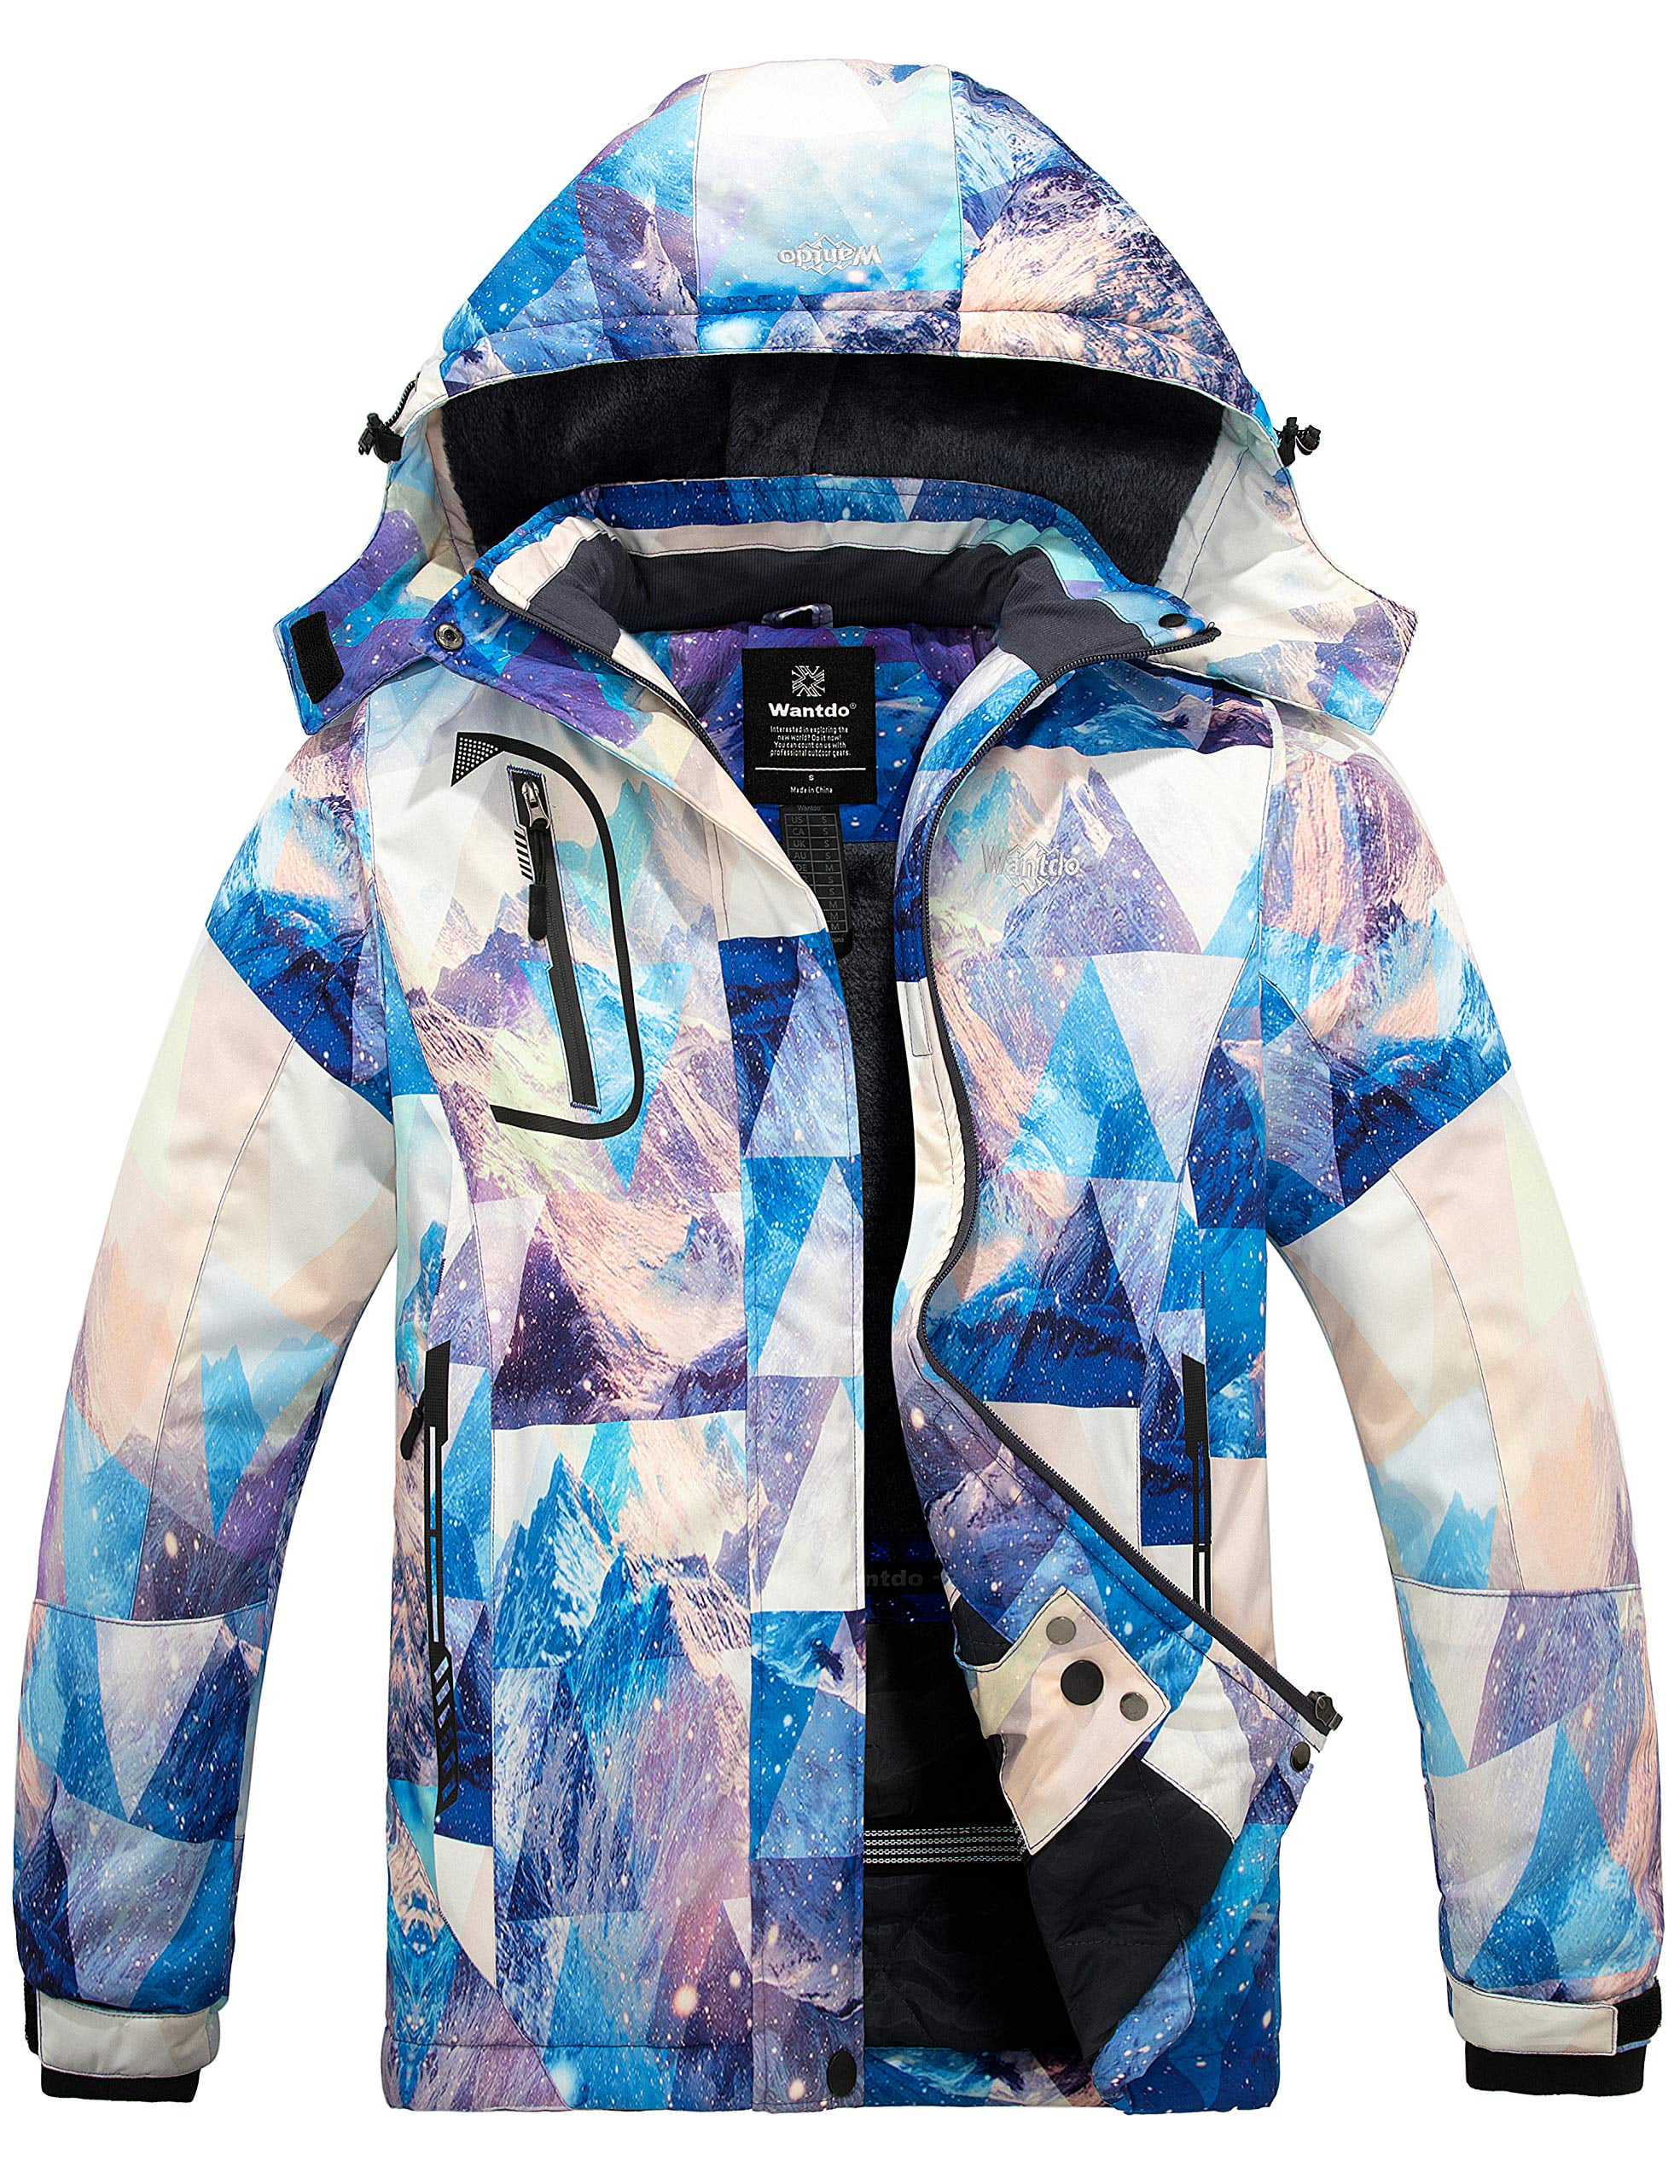 Wantdo Womens Mountain Waterproof Ski Jacket Hooded Winter Snow Coat Insulated Parka Fleece Rain Jacket 